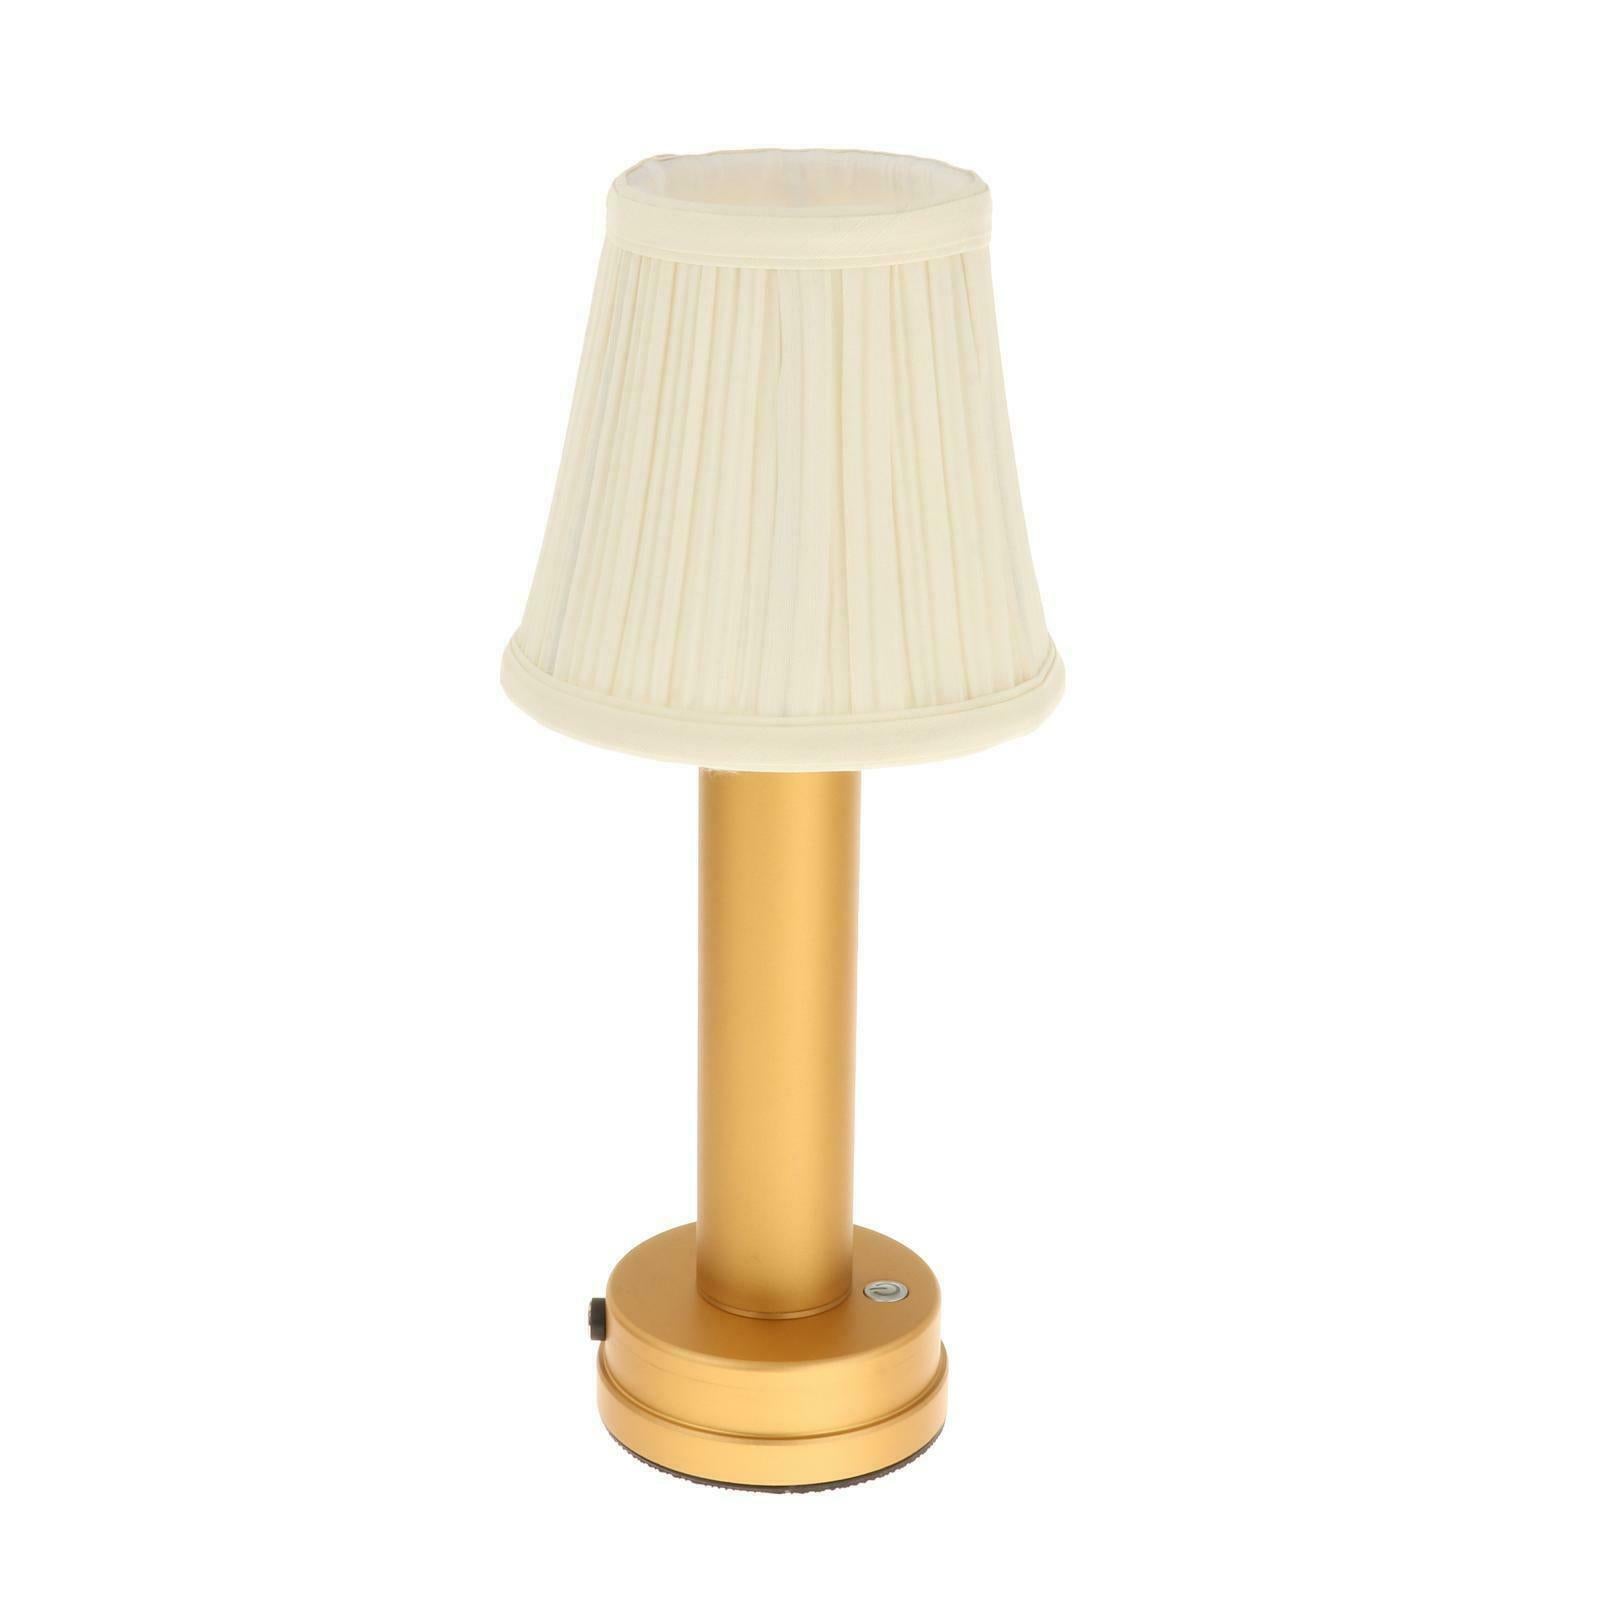 Retro Table Lamp Bedside Lamp Light Bedside Night Light Living Room Golden